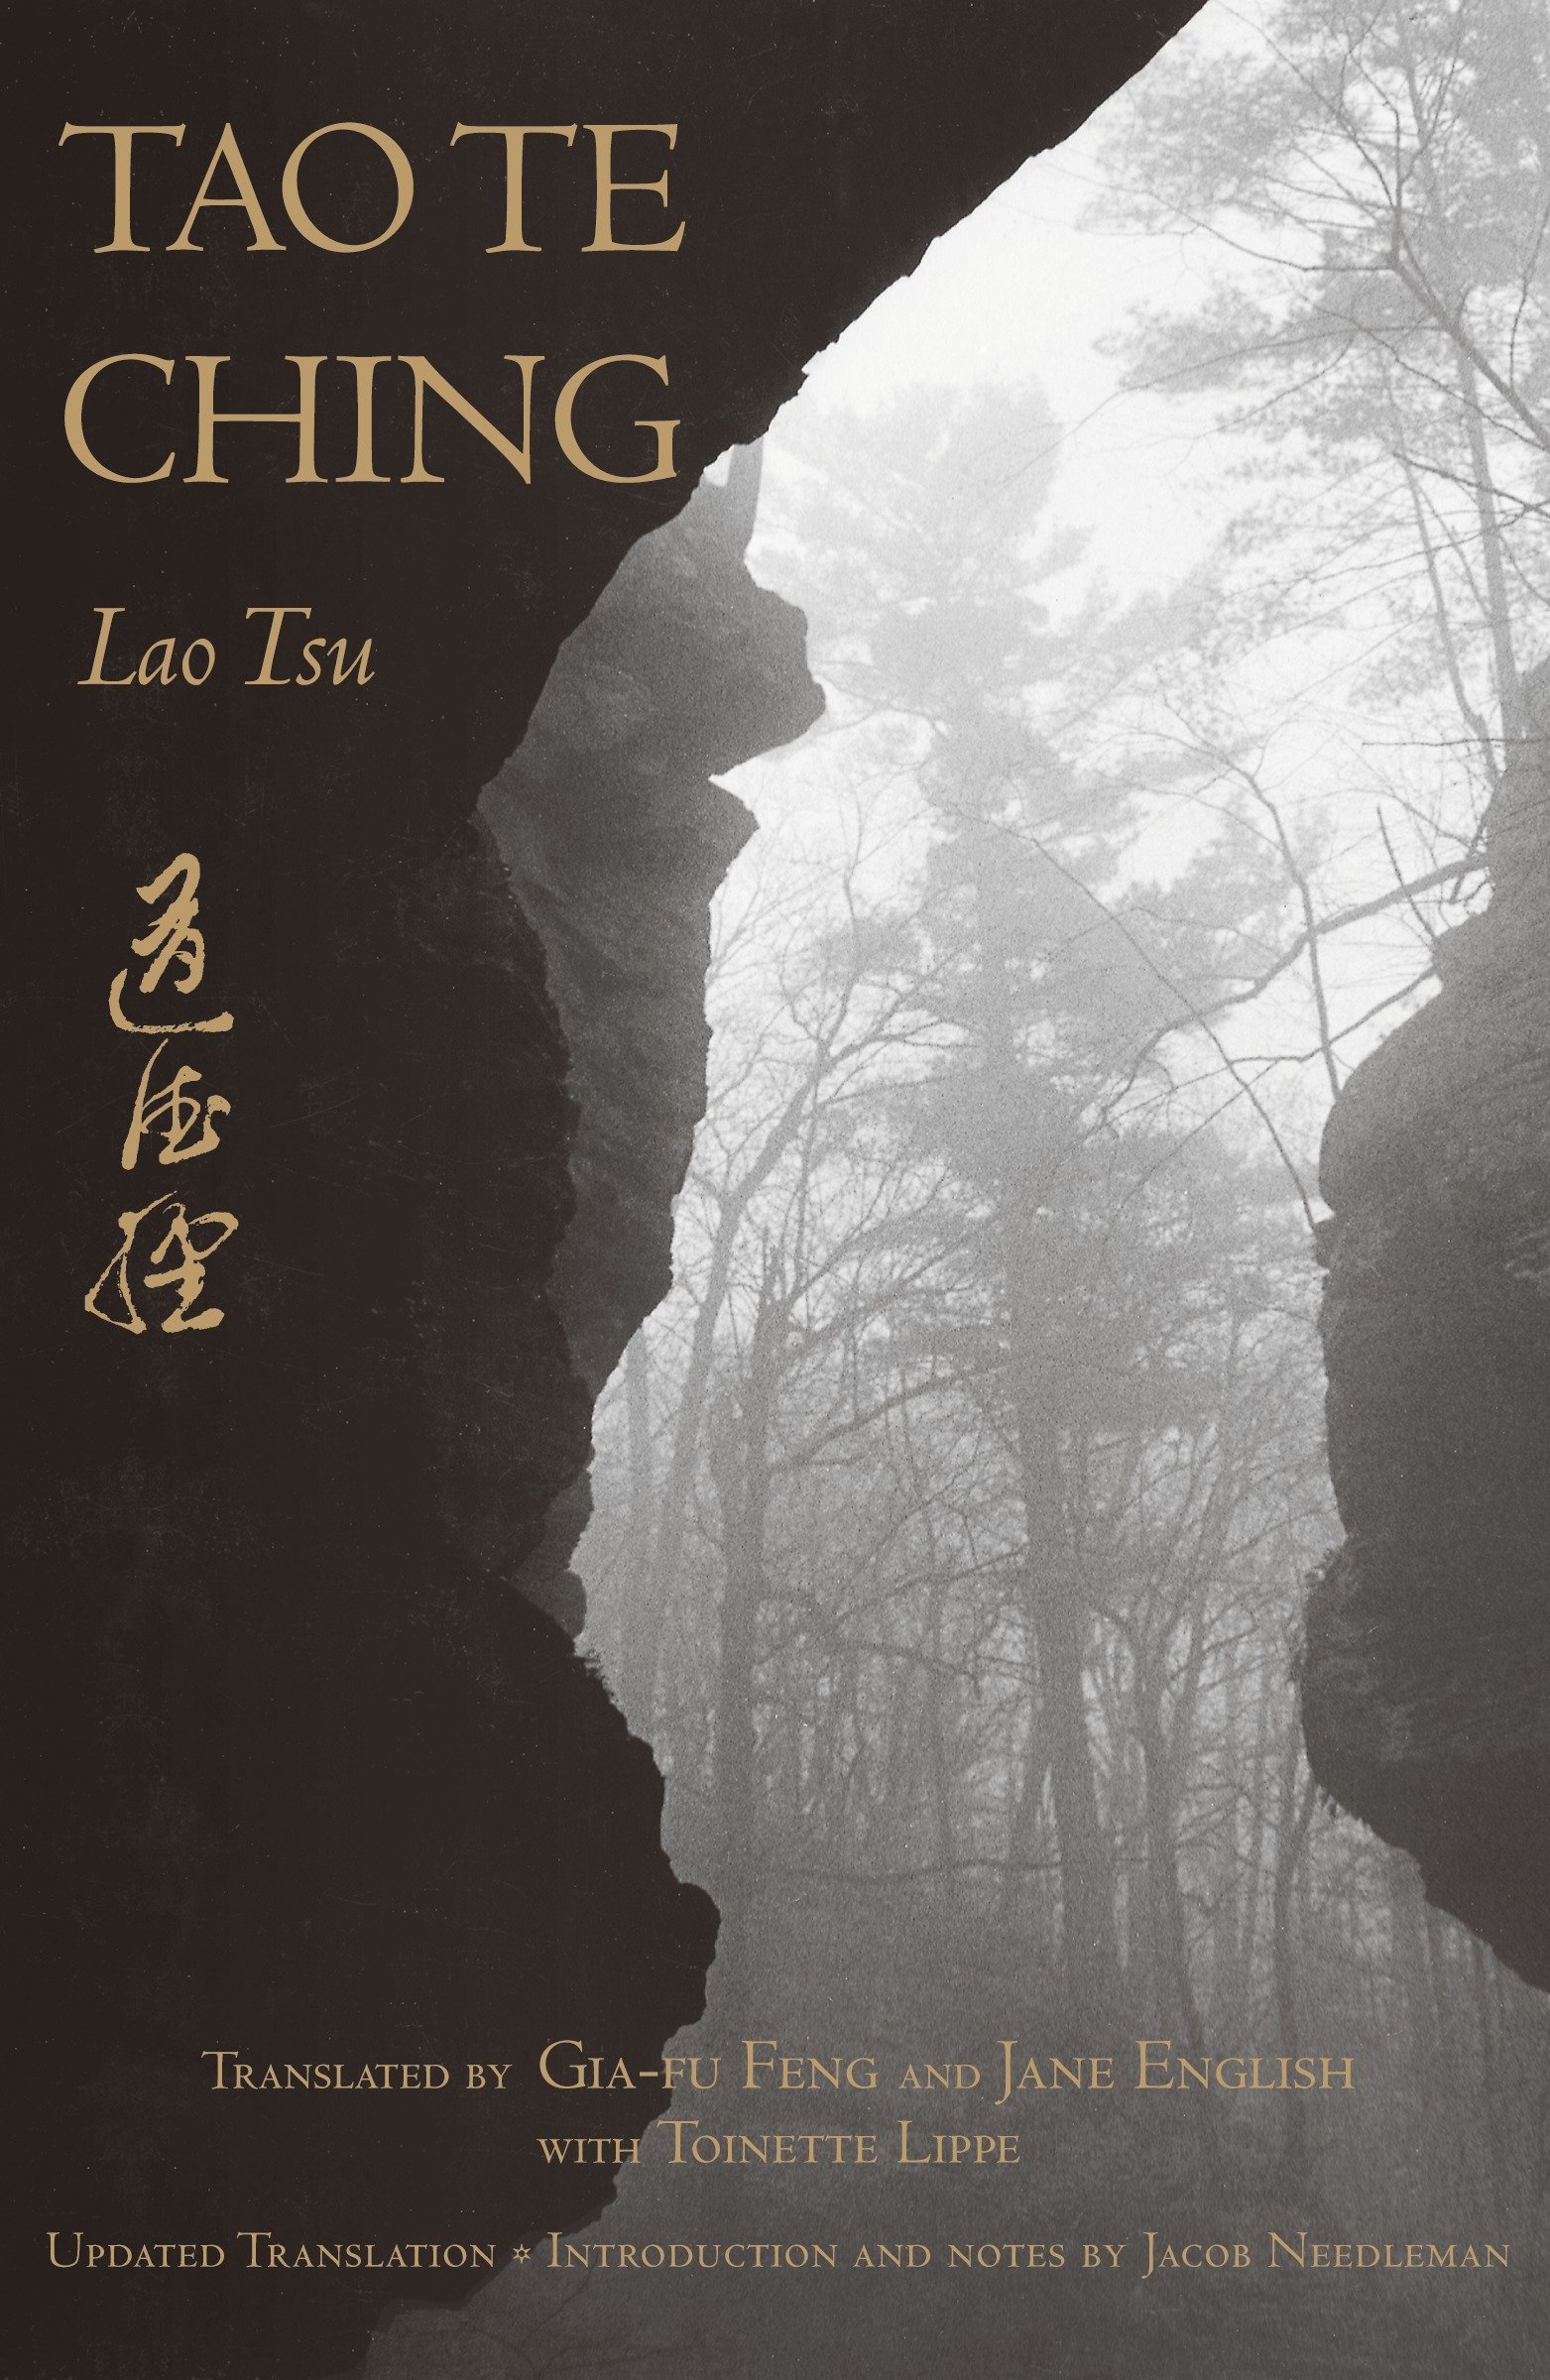 Gia-Fu Feng, Jane English, Laozi, Toinette Lippe, Jacob Needleman: Tao Te Ching (Paperback, 1989, Vintage)